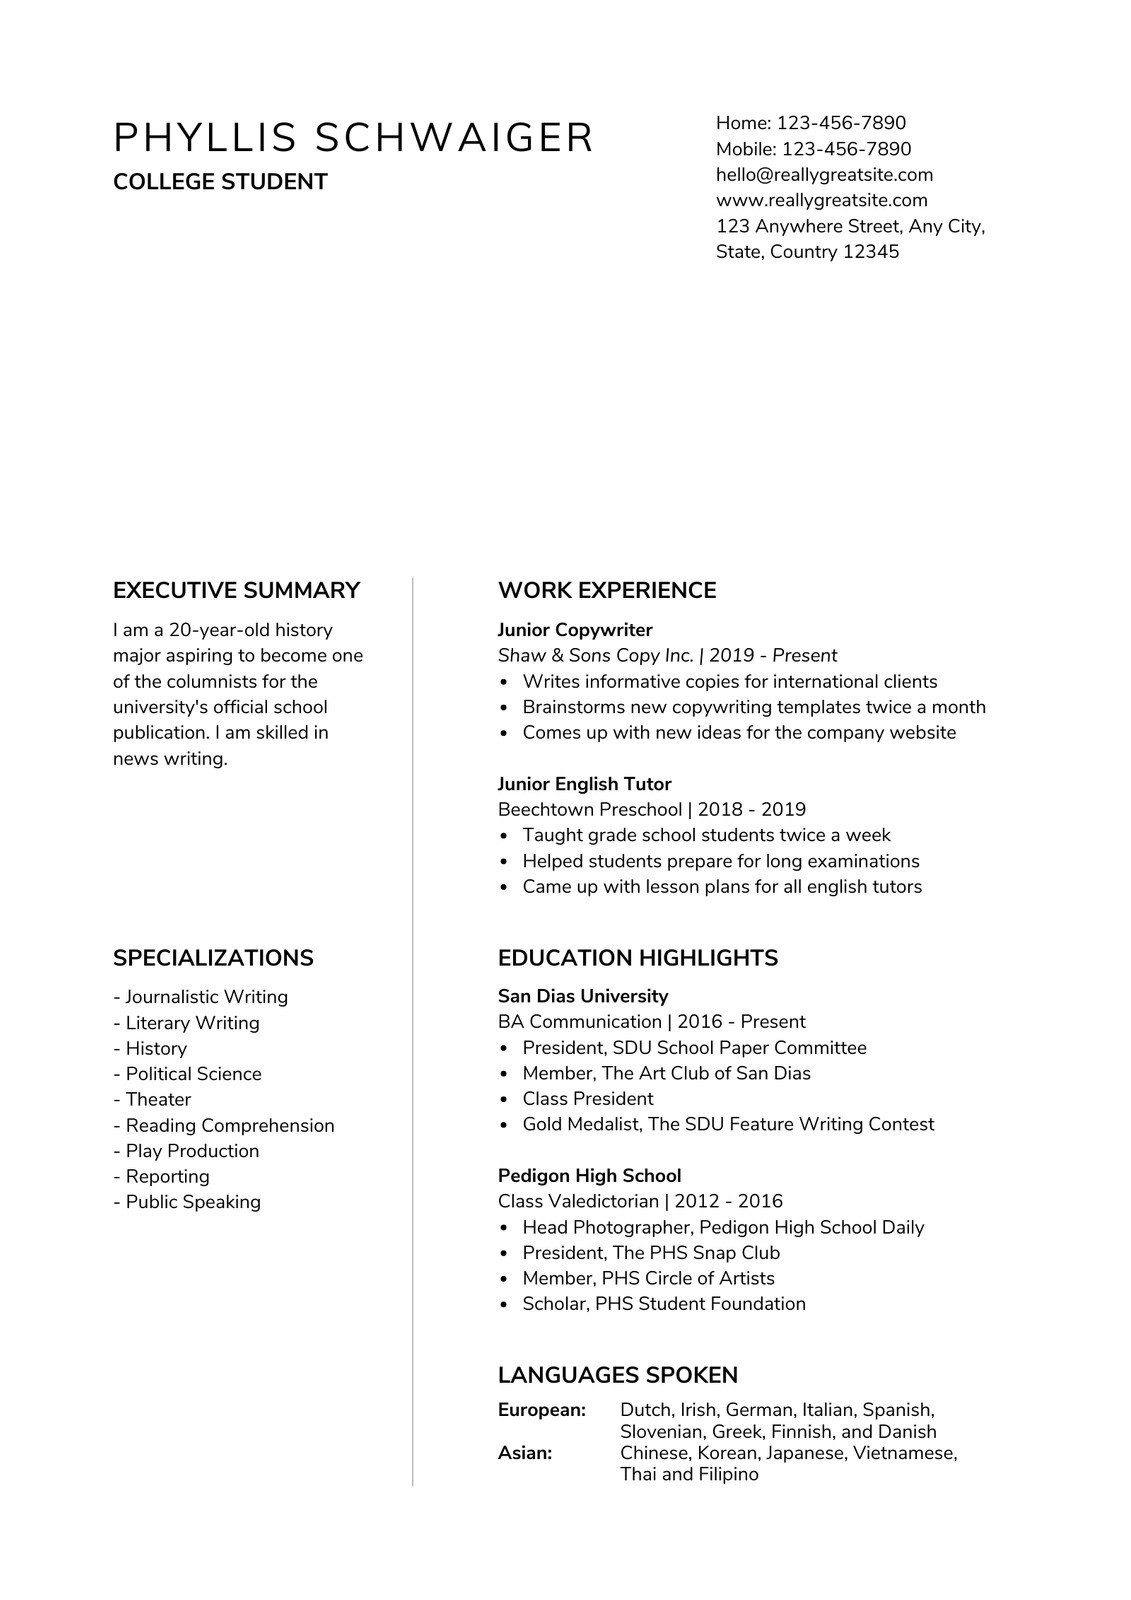 Basic Resume Template for College Students 35lancarrezekiq Free Printable, Customizable College Resume Templates Canva